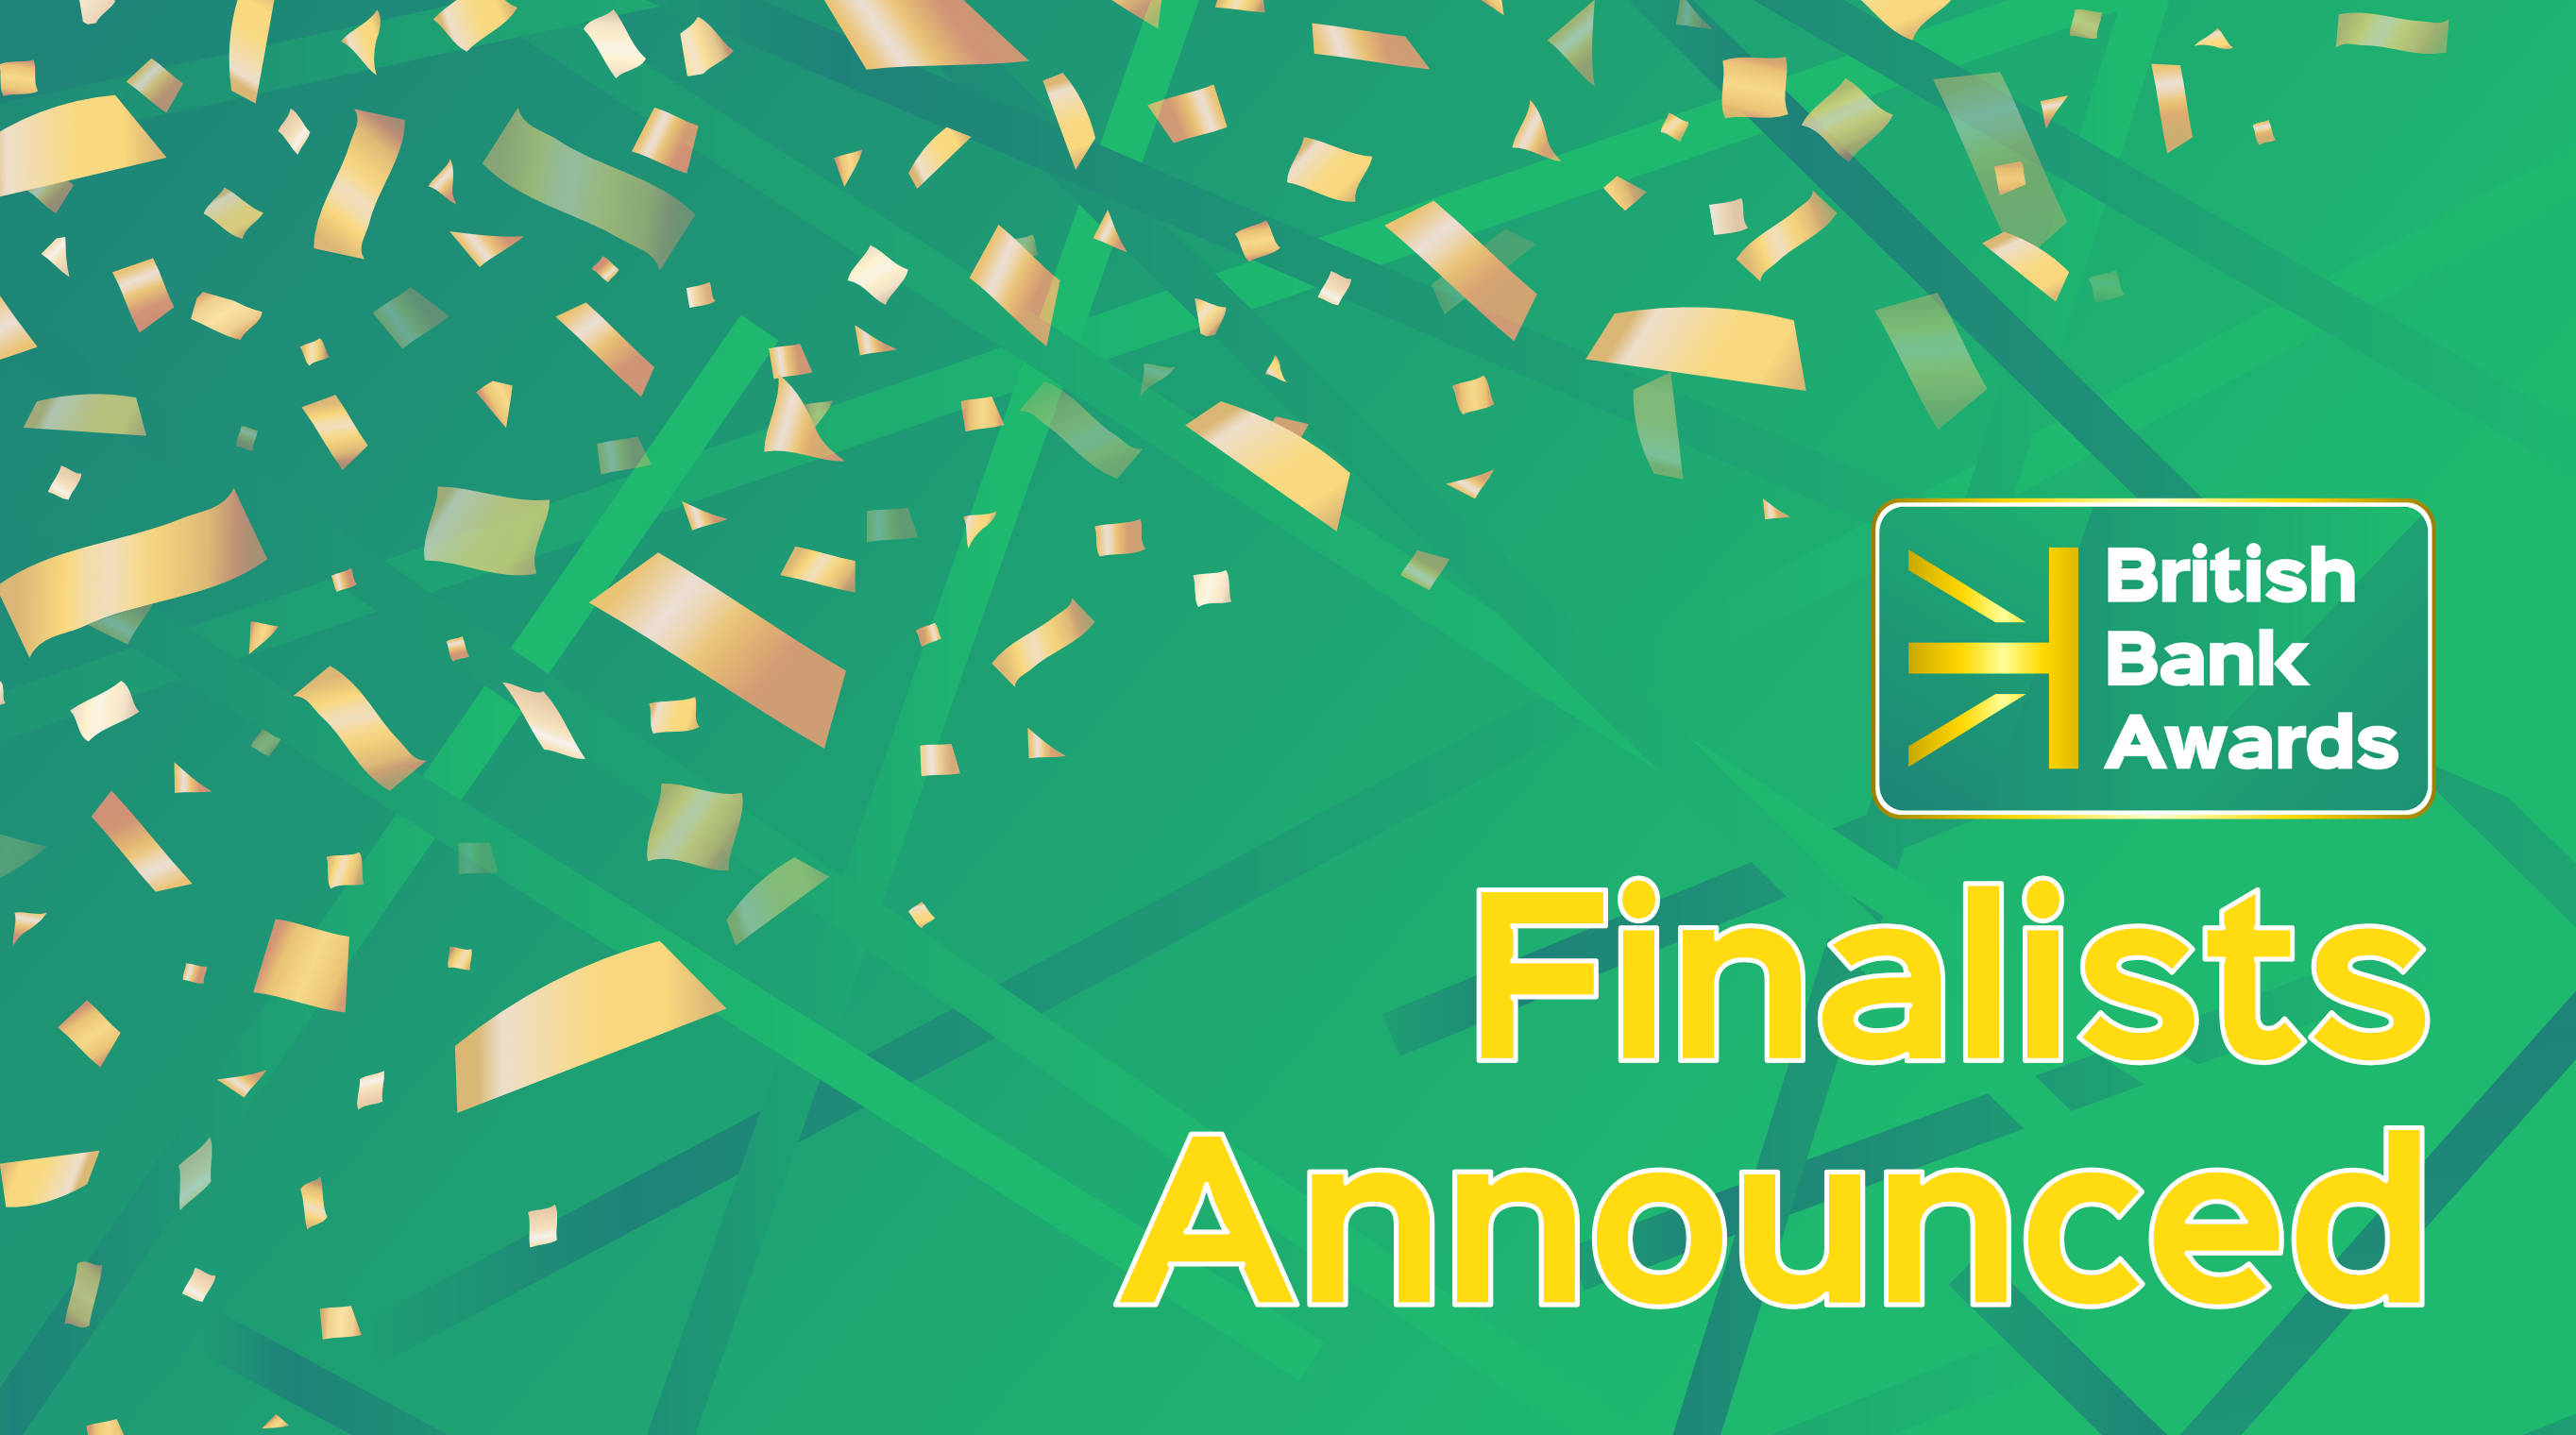 British Bank Awards 2020 Finalists Announced